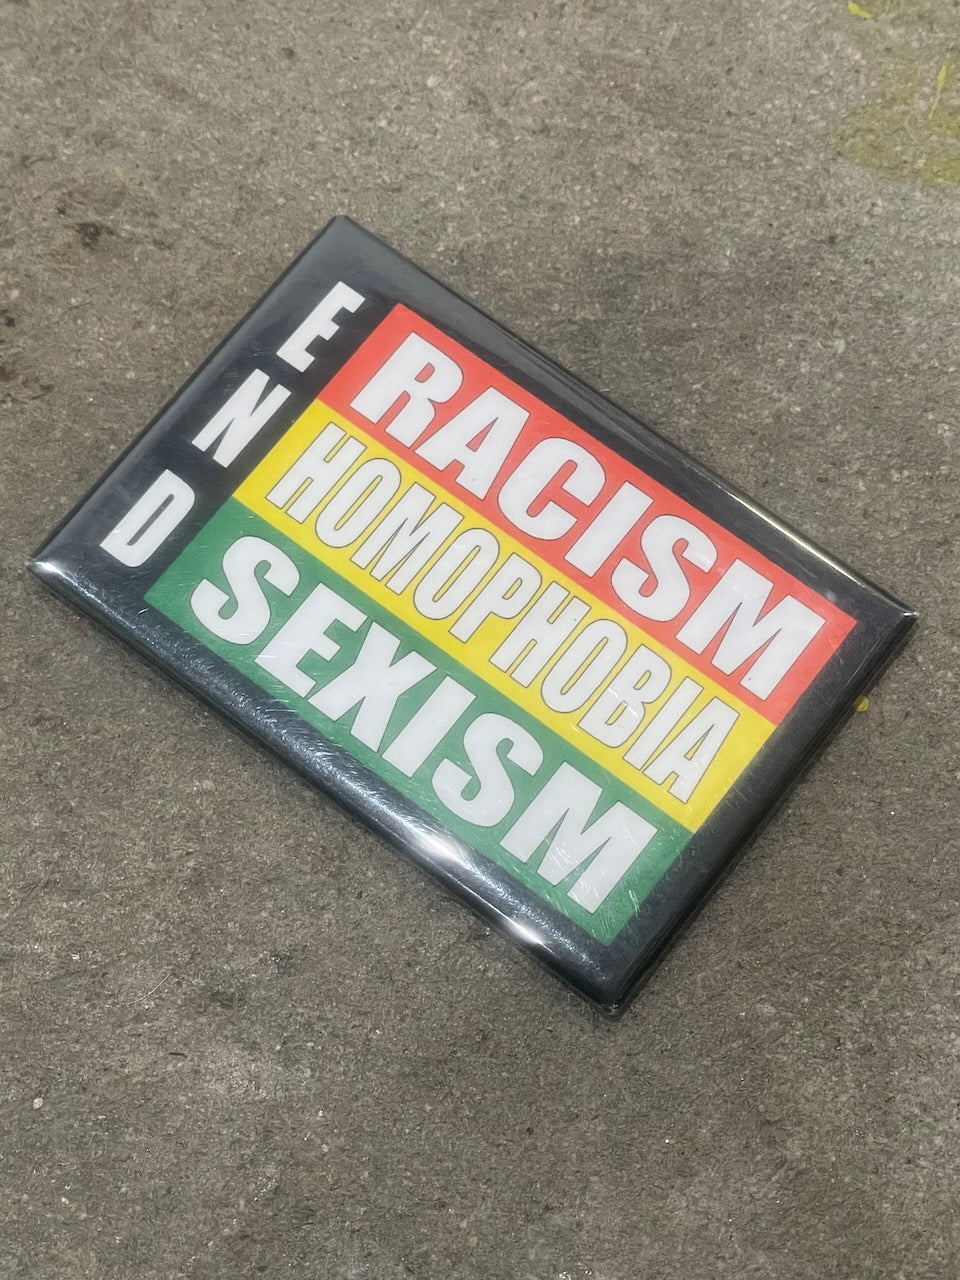 END racism homophobia sexism Magnet